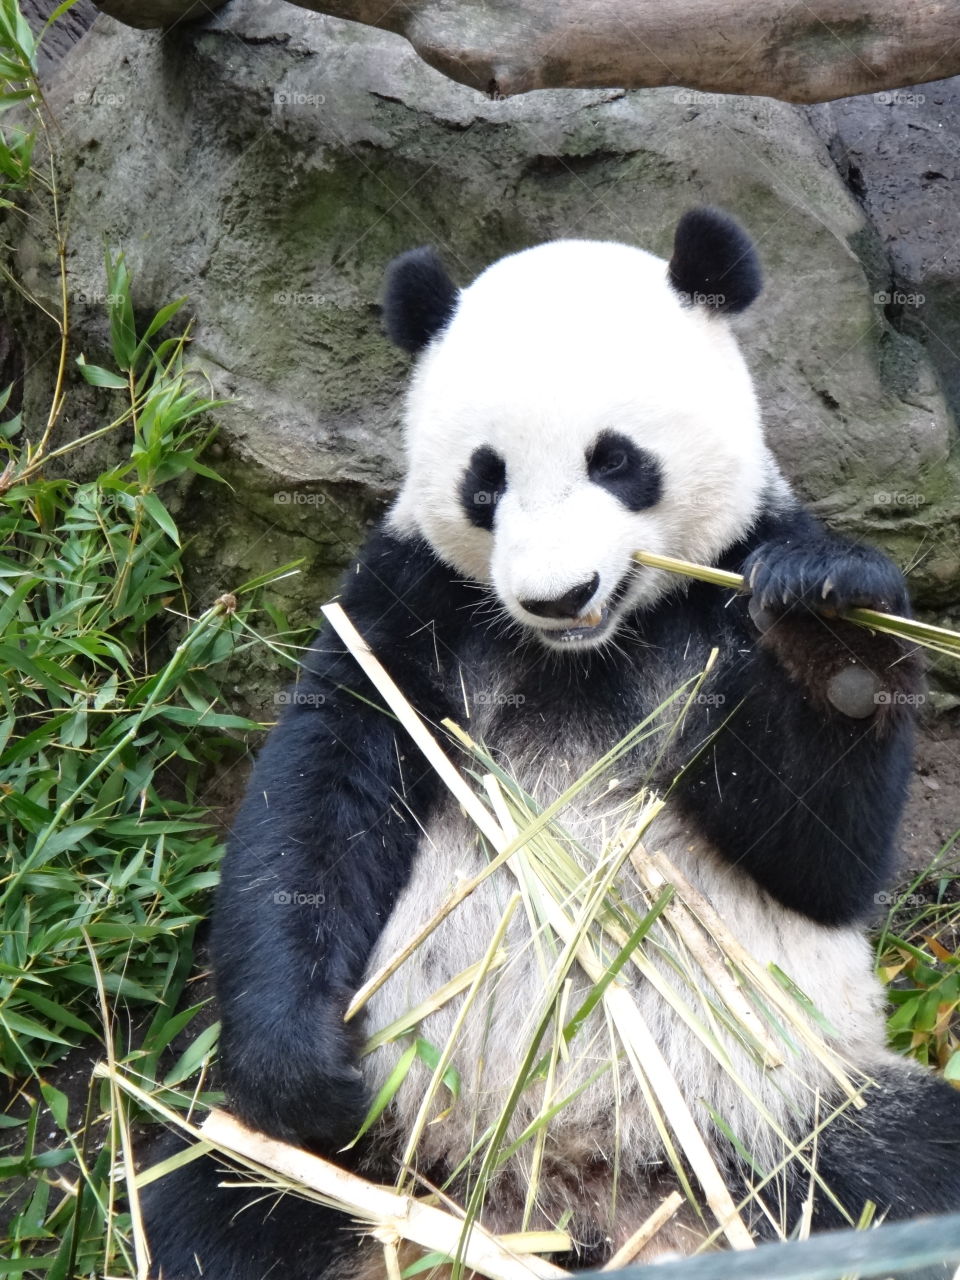 Snacking on bamboo. Panda eating bamboo